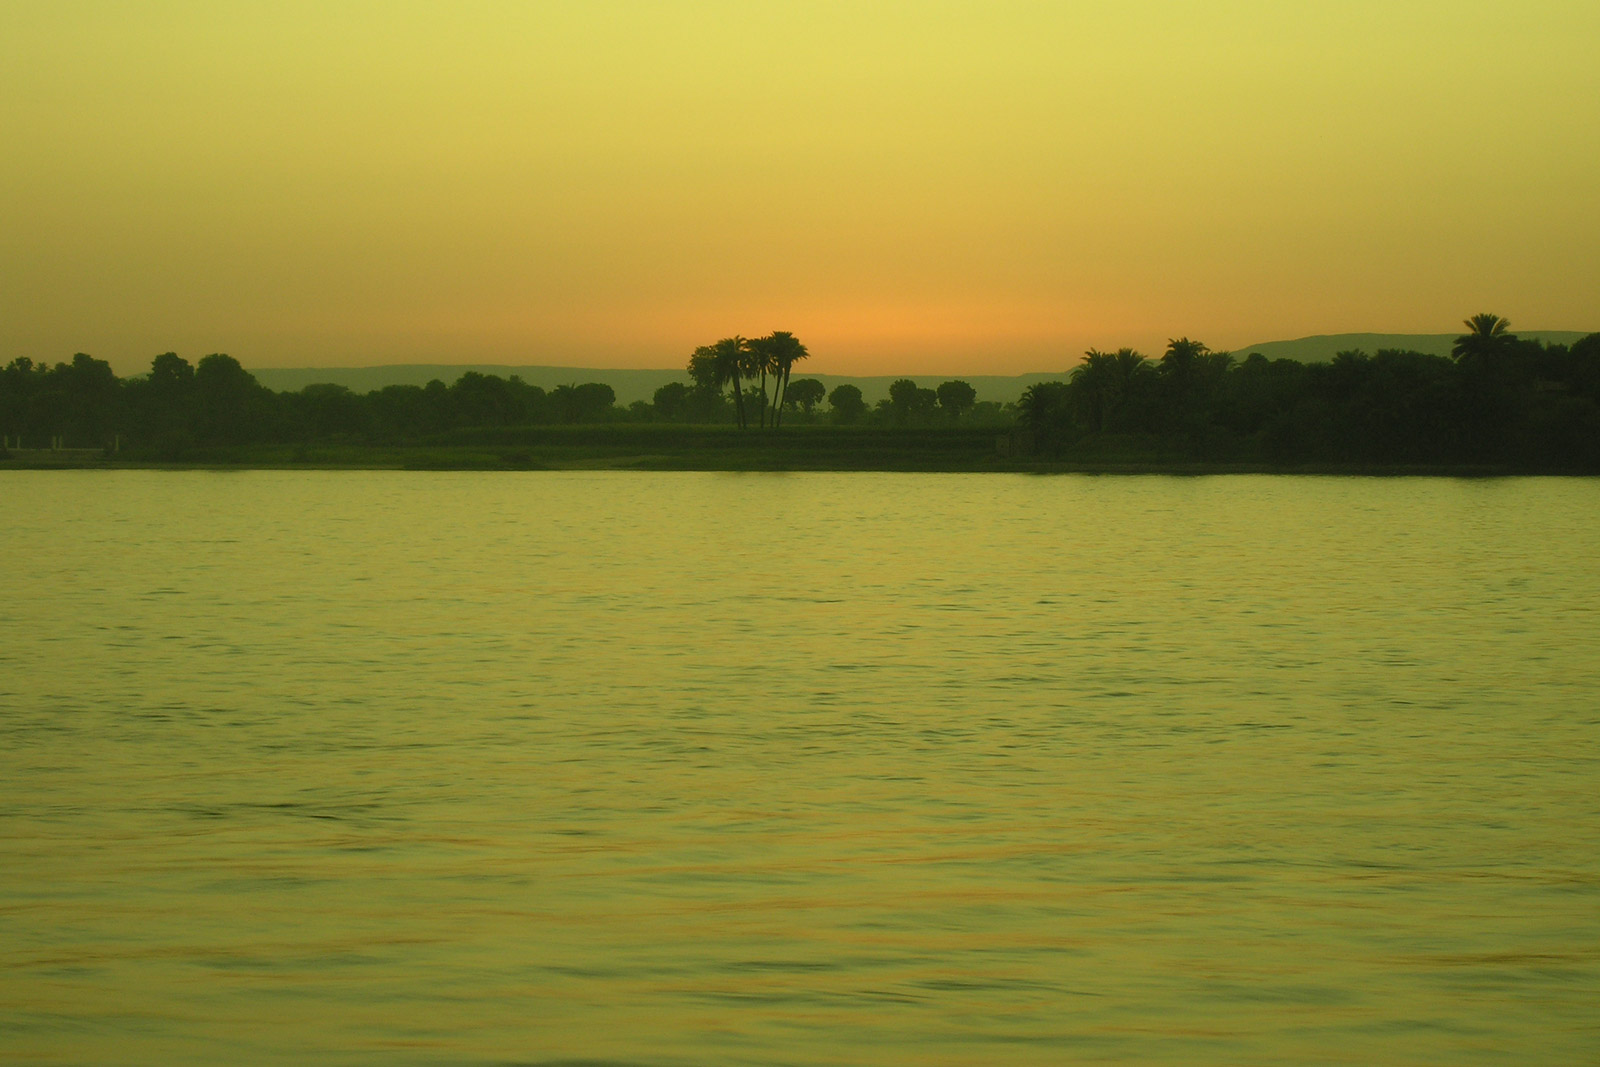 Bank of the Nile from the boat. Photography: Antonino Cardillo, 2005